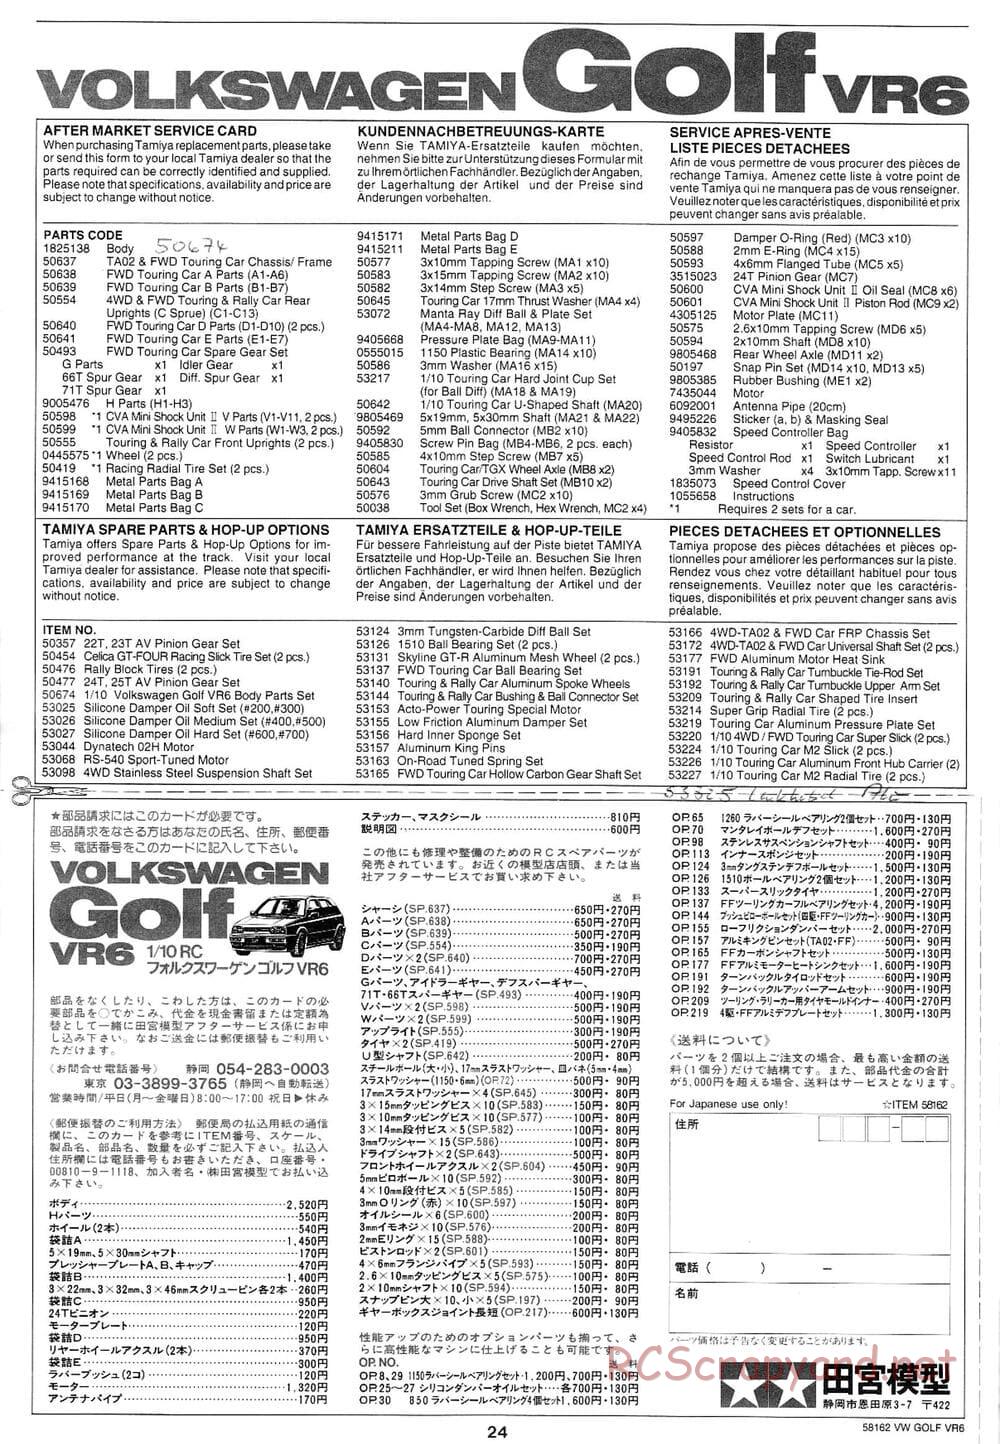 Tamiya - Volkswagen Golf VR6 - FF-01 Chassis - Manual - Page 24